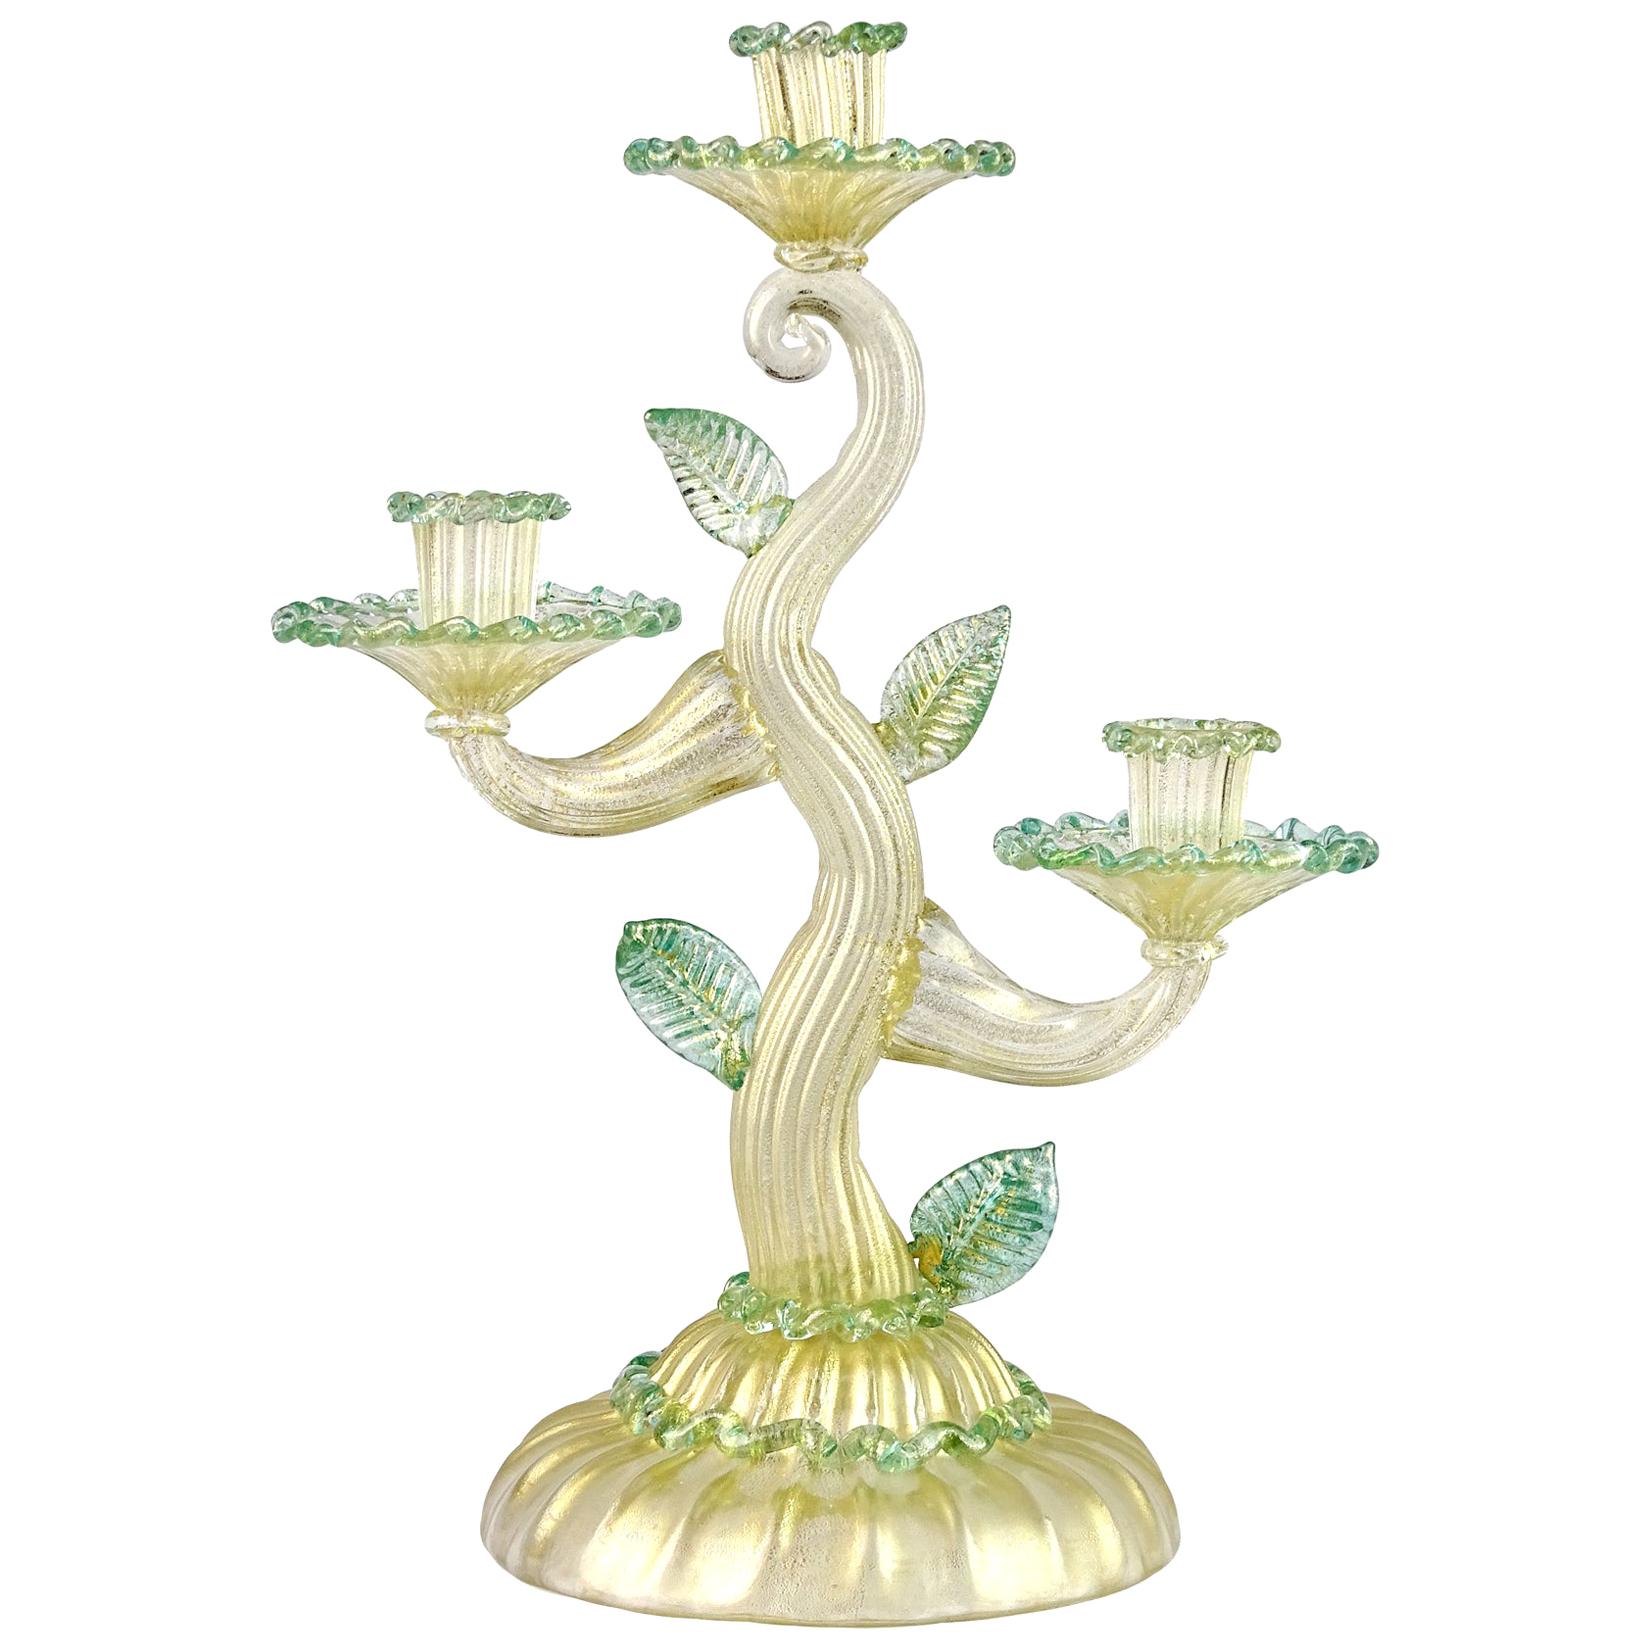 Barovier Toso Murano Gold Flecks Green Italian Art Glass Candelabra Candleholder